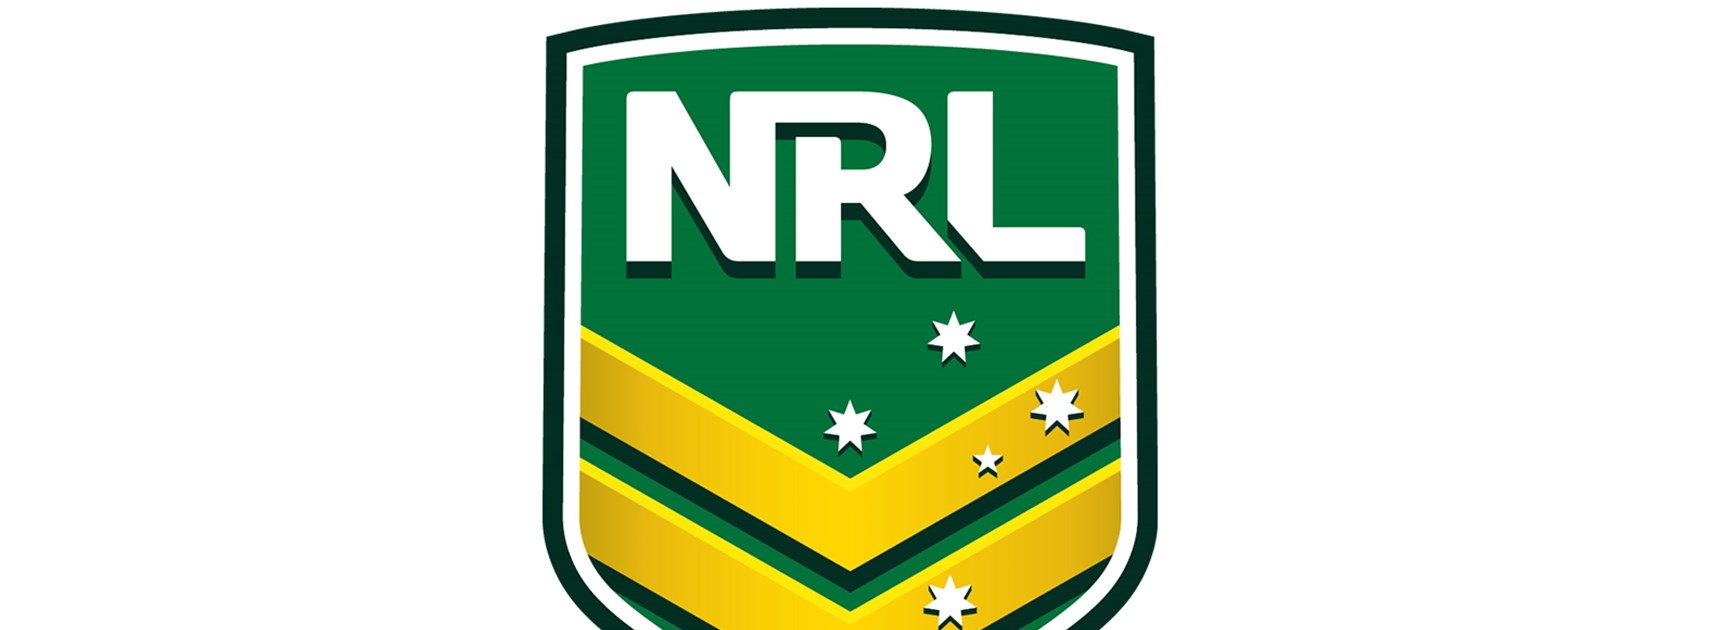 NRL logo on white background.